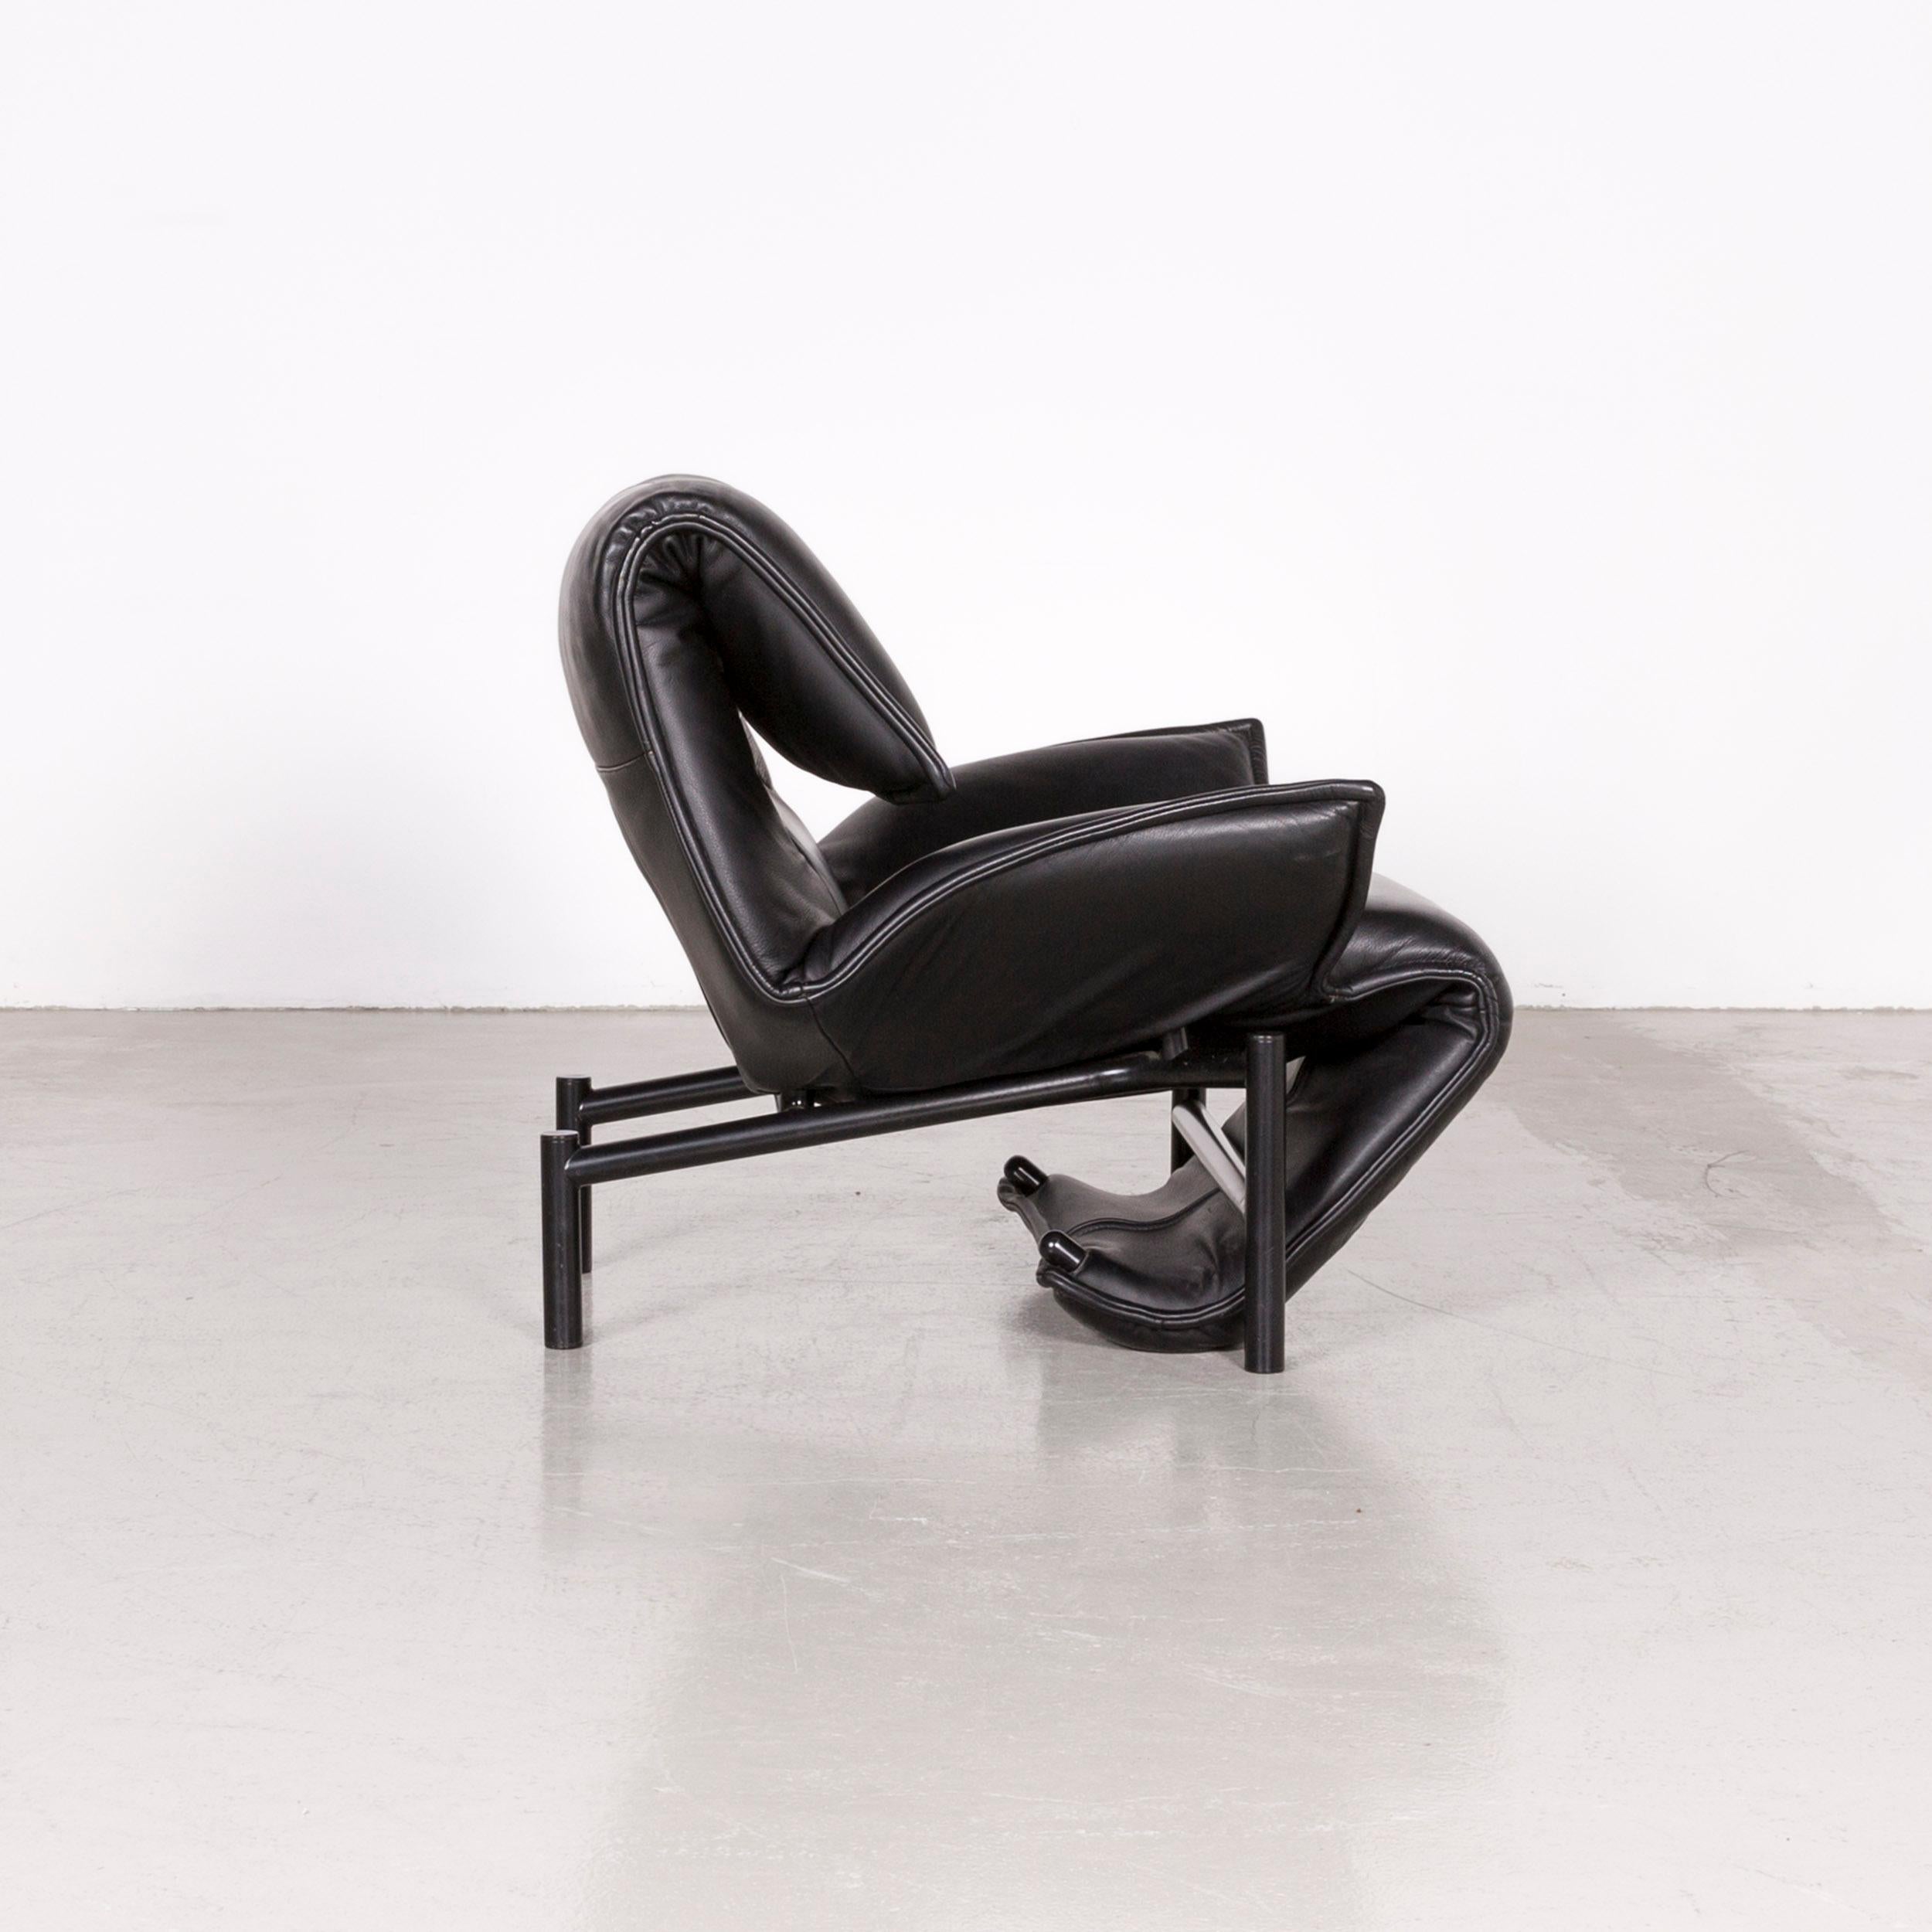 Fabric Cassina Veranda Designer Leather Armchair in Black Recliner Function For Sale